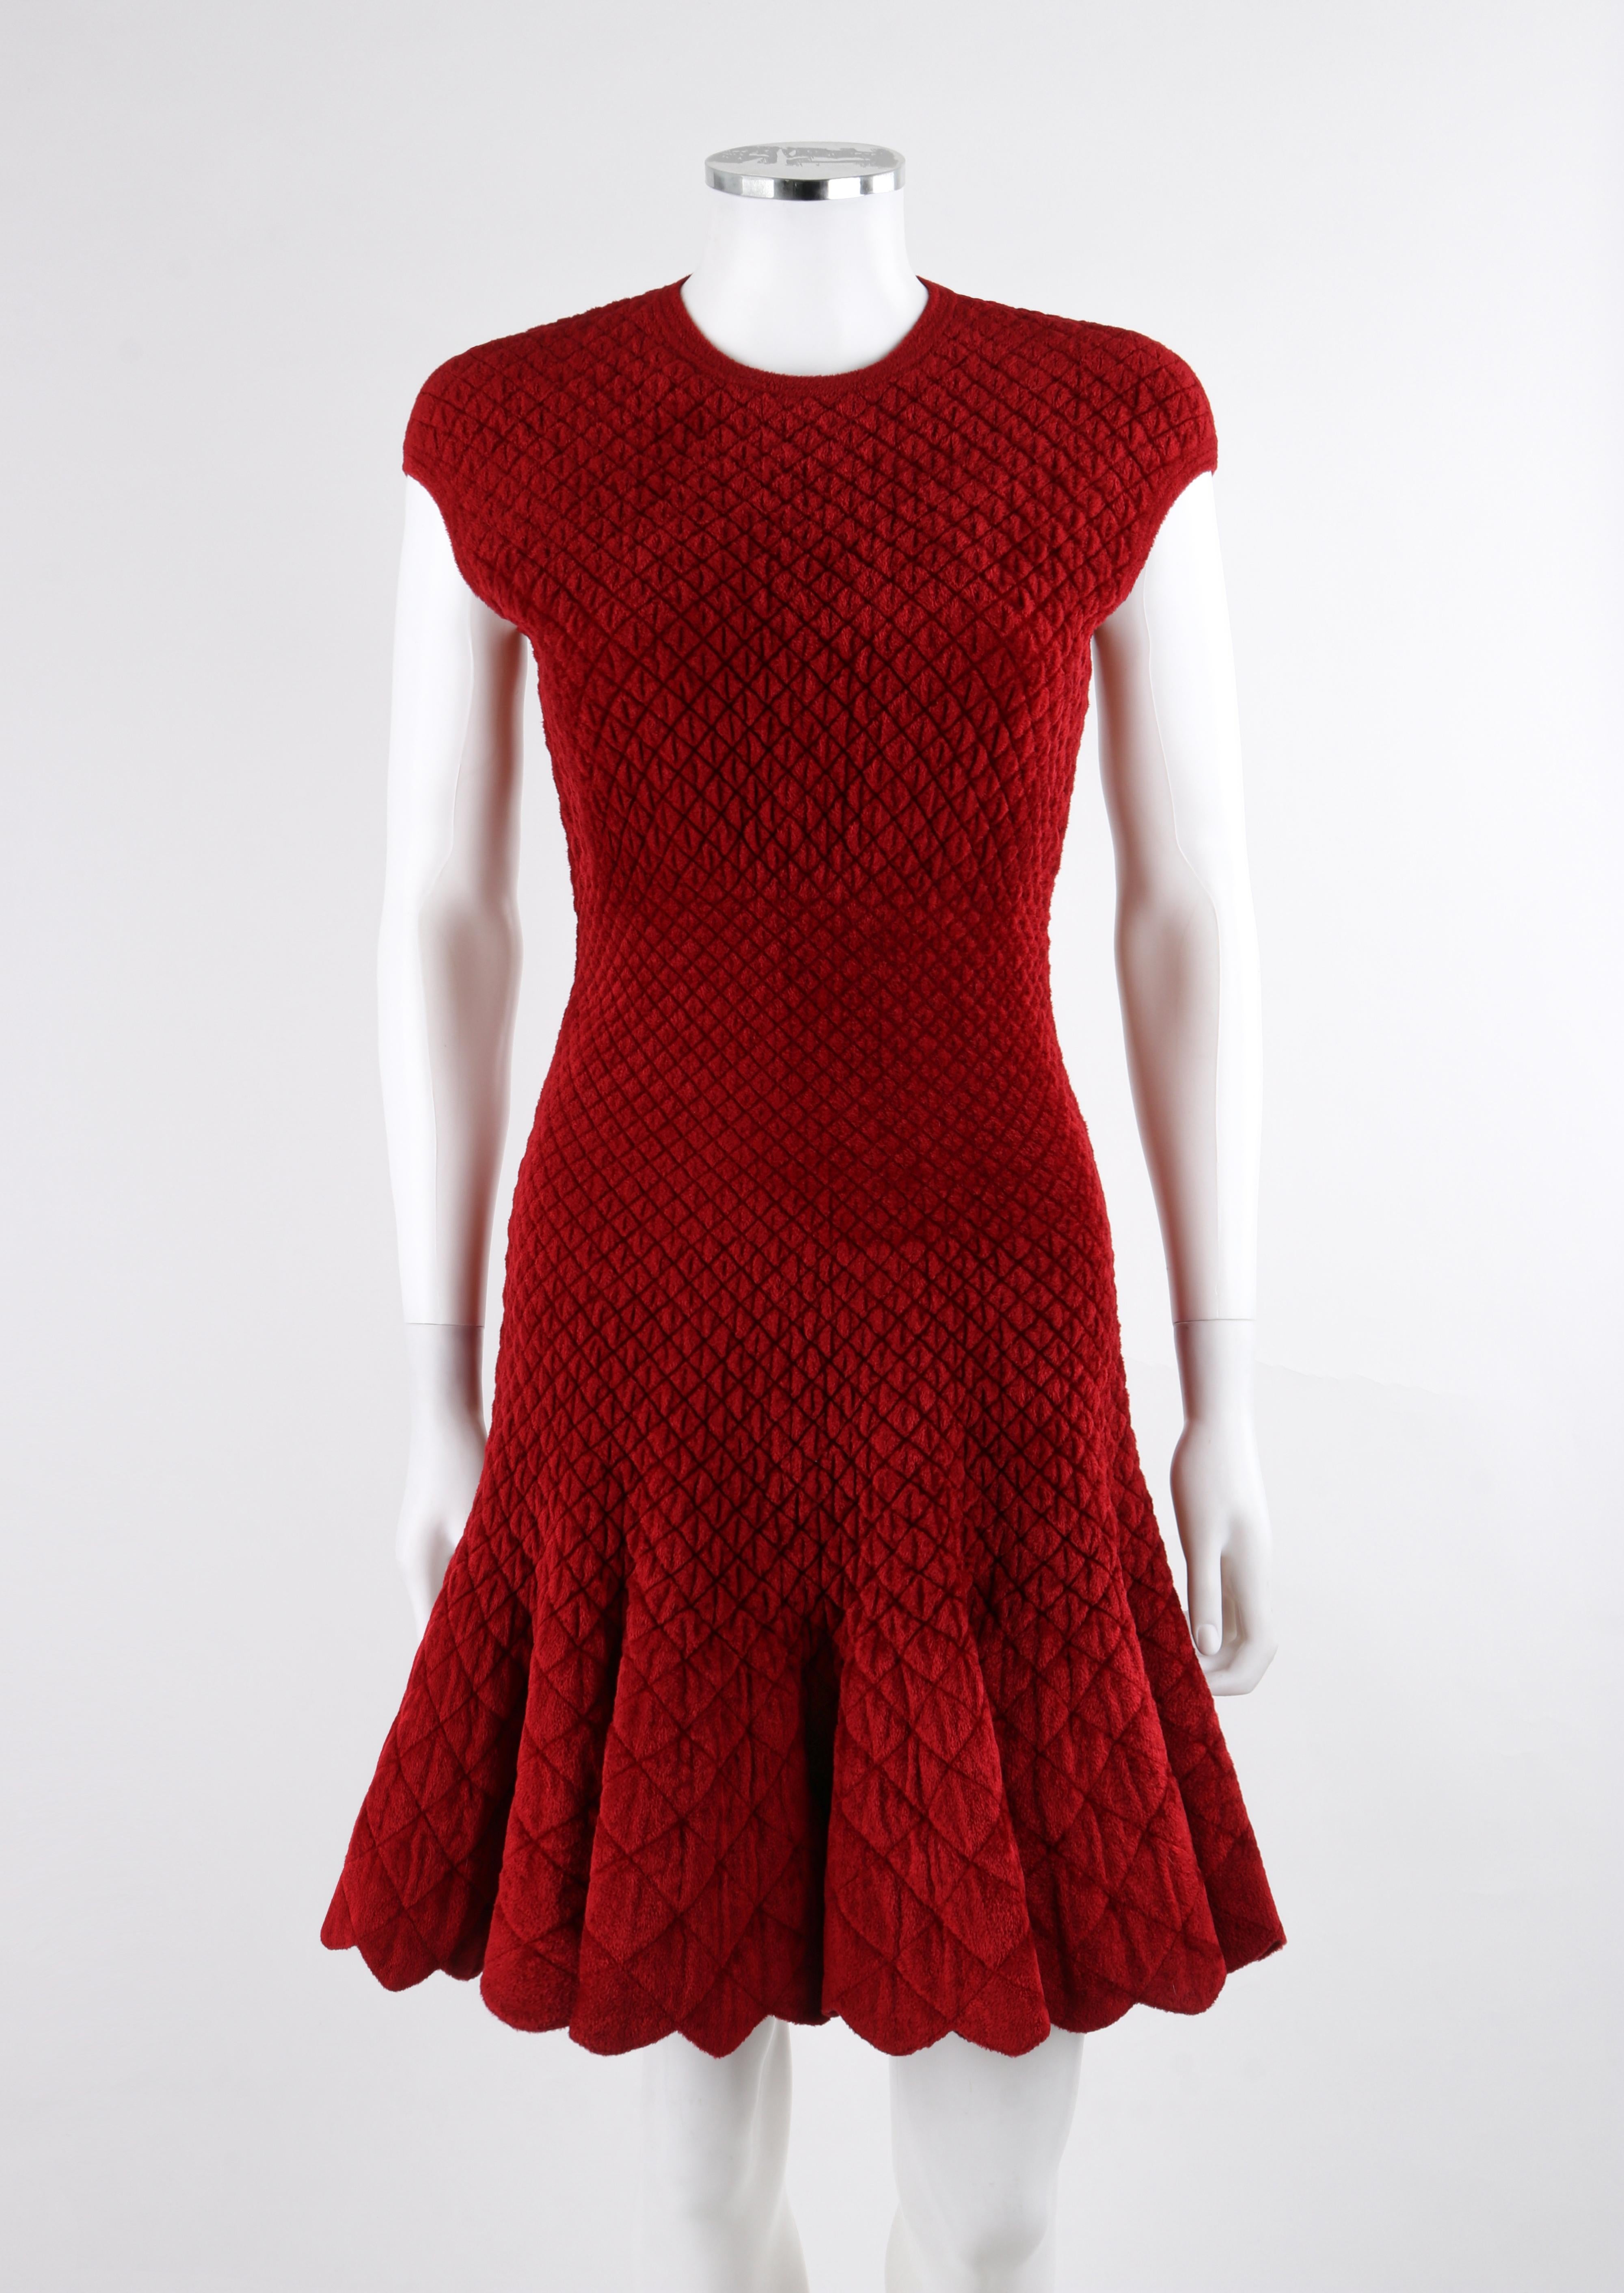 ALEXANDER McQUEEN c.2010's Red Wool Quilted Plush Sleeveless Fit & Flair Dress

Marque / Fabricant : Alexander McQueen
Circa : 2010's
Designer : Sarah Burton
Style : Robe sans manches
Couleur(s) : Rouge
Doublée : Non
Tissu marqué : 